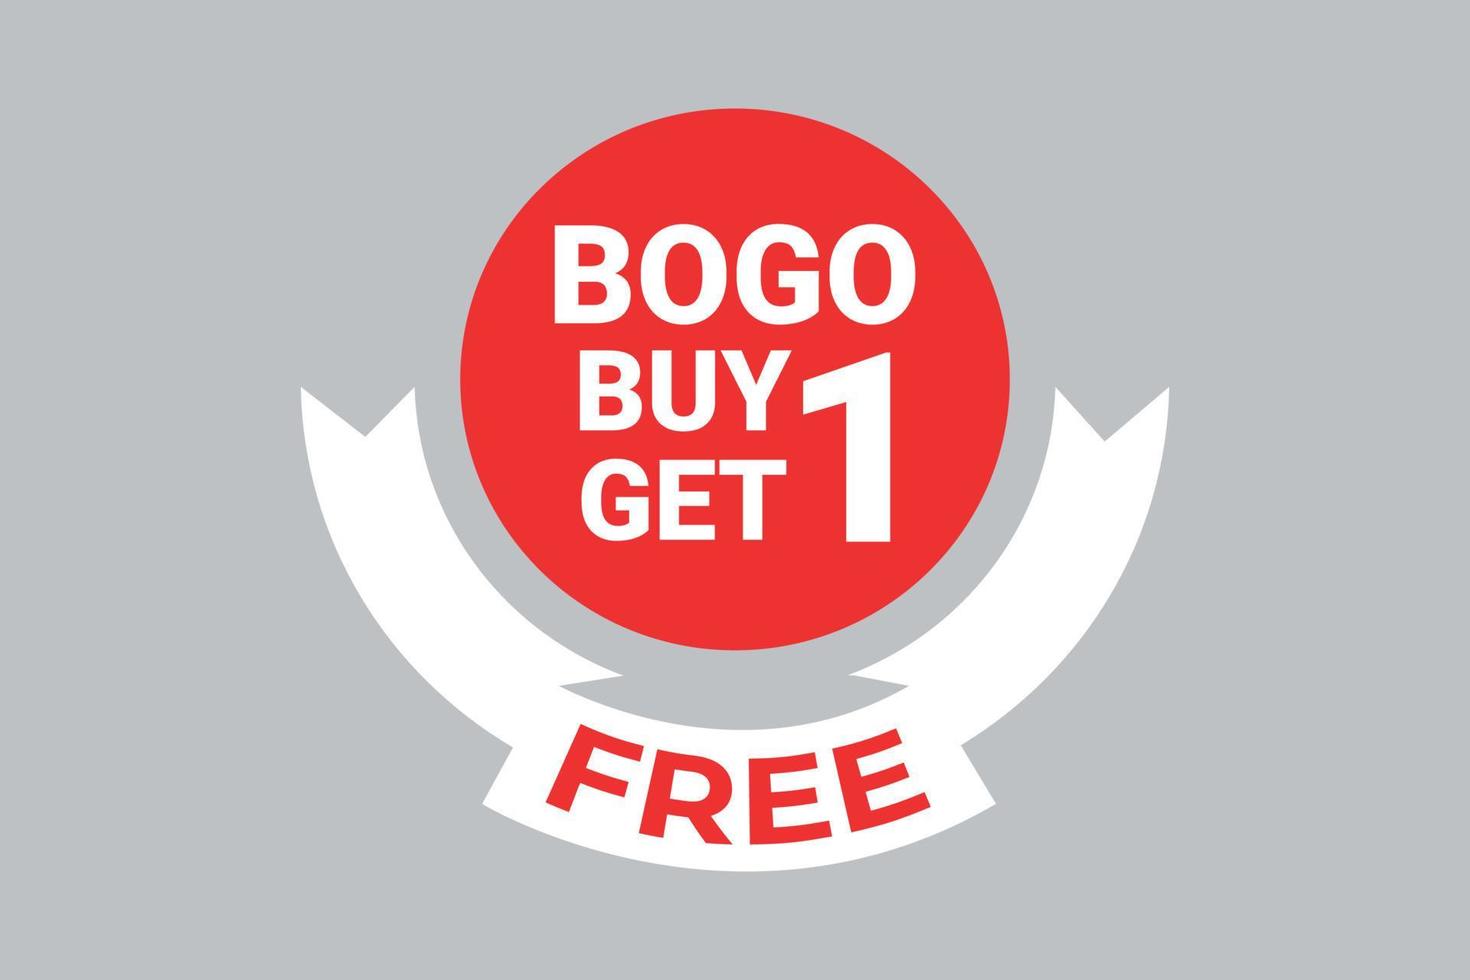 Bogo buy 1 get 1 free sale vector